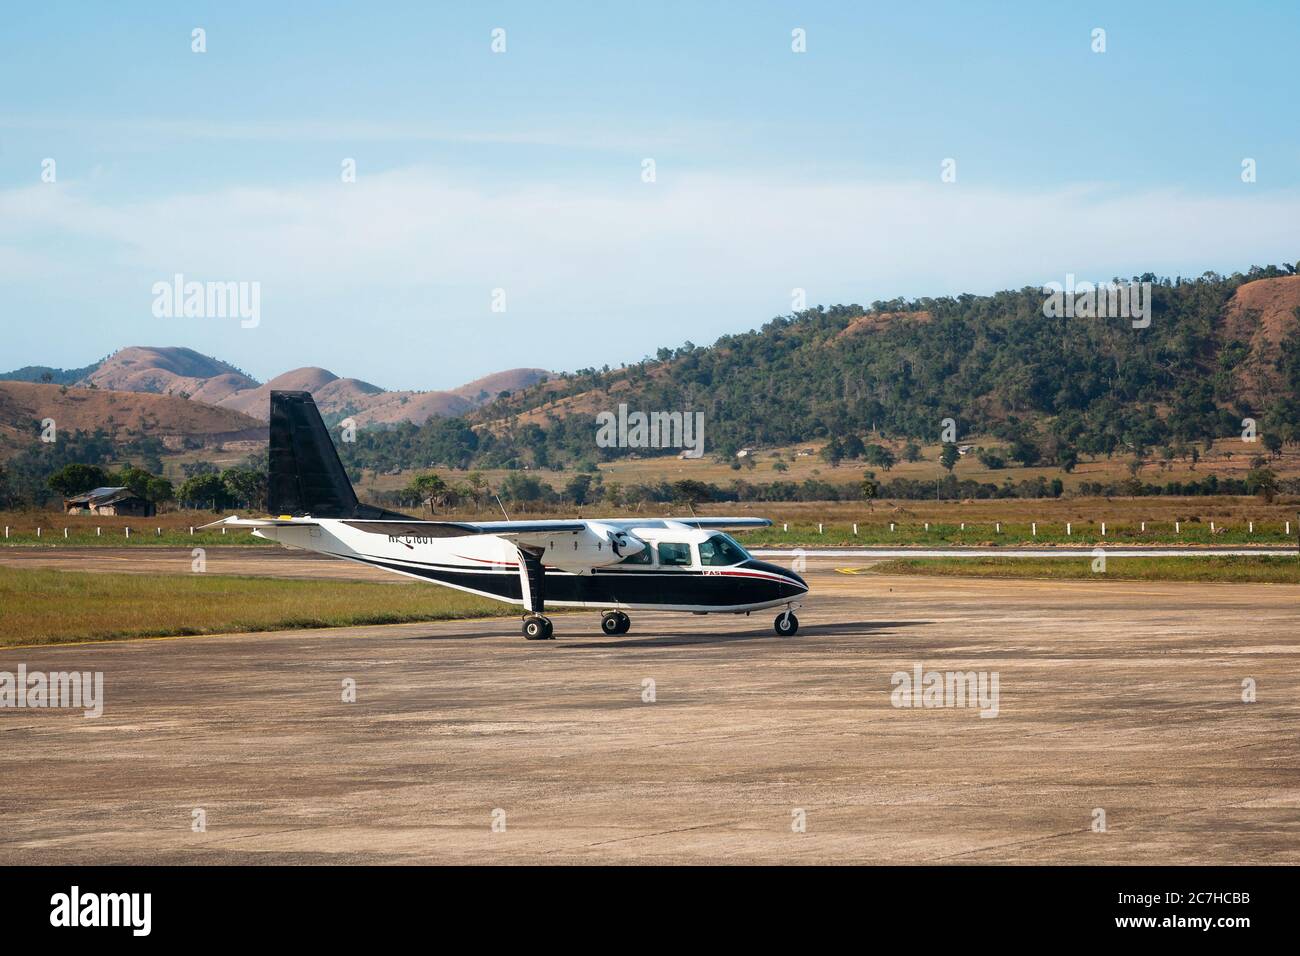 Coron, Philippines - January 29, 2019: Small private aircraft Britten-Norman BN-2A-21 Islander aircraft at Francisco B. Reyes Airport. Stock Photo